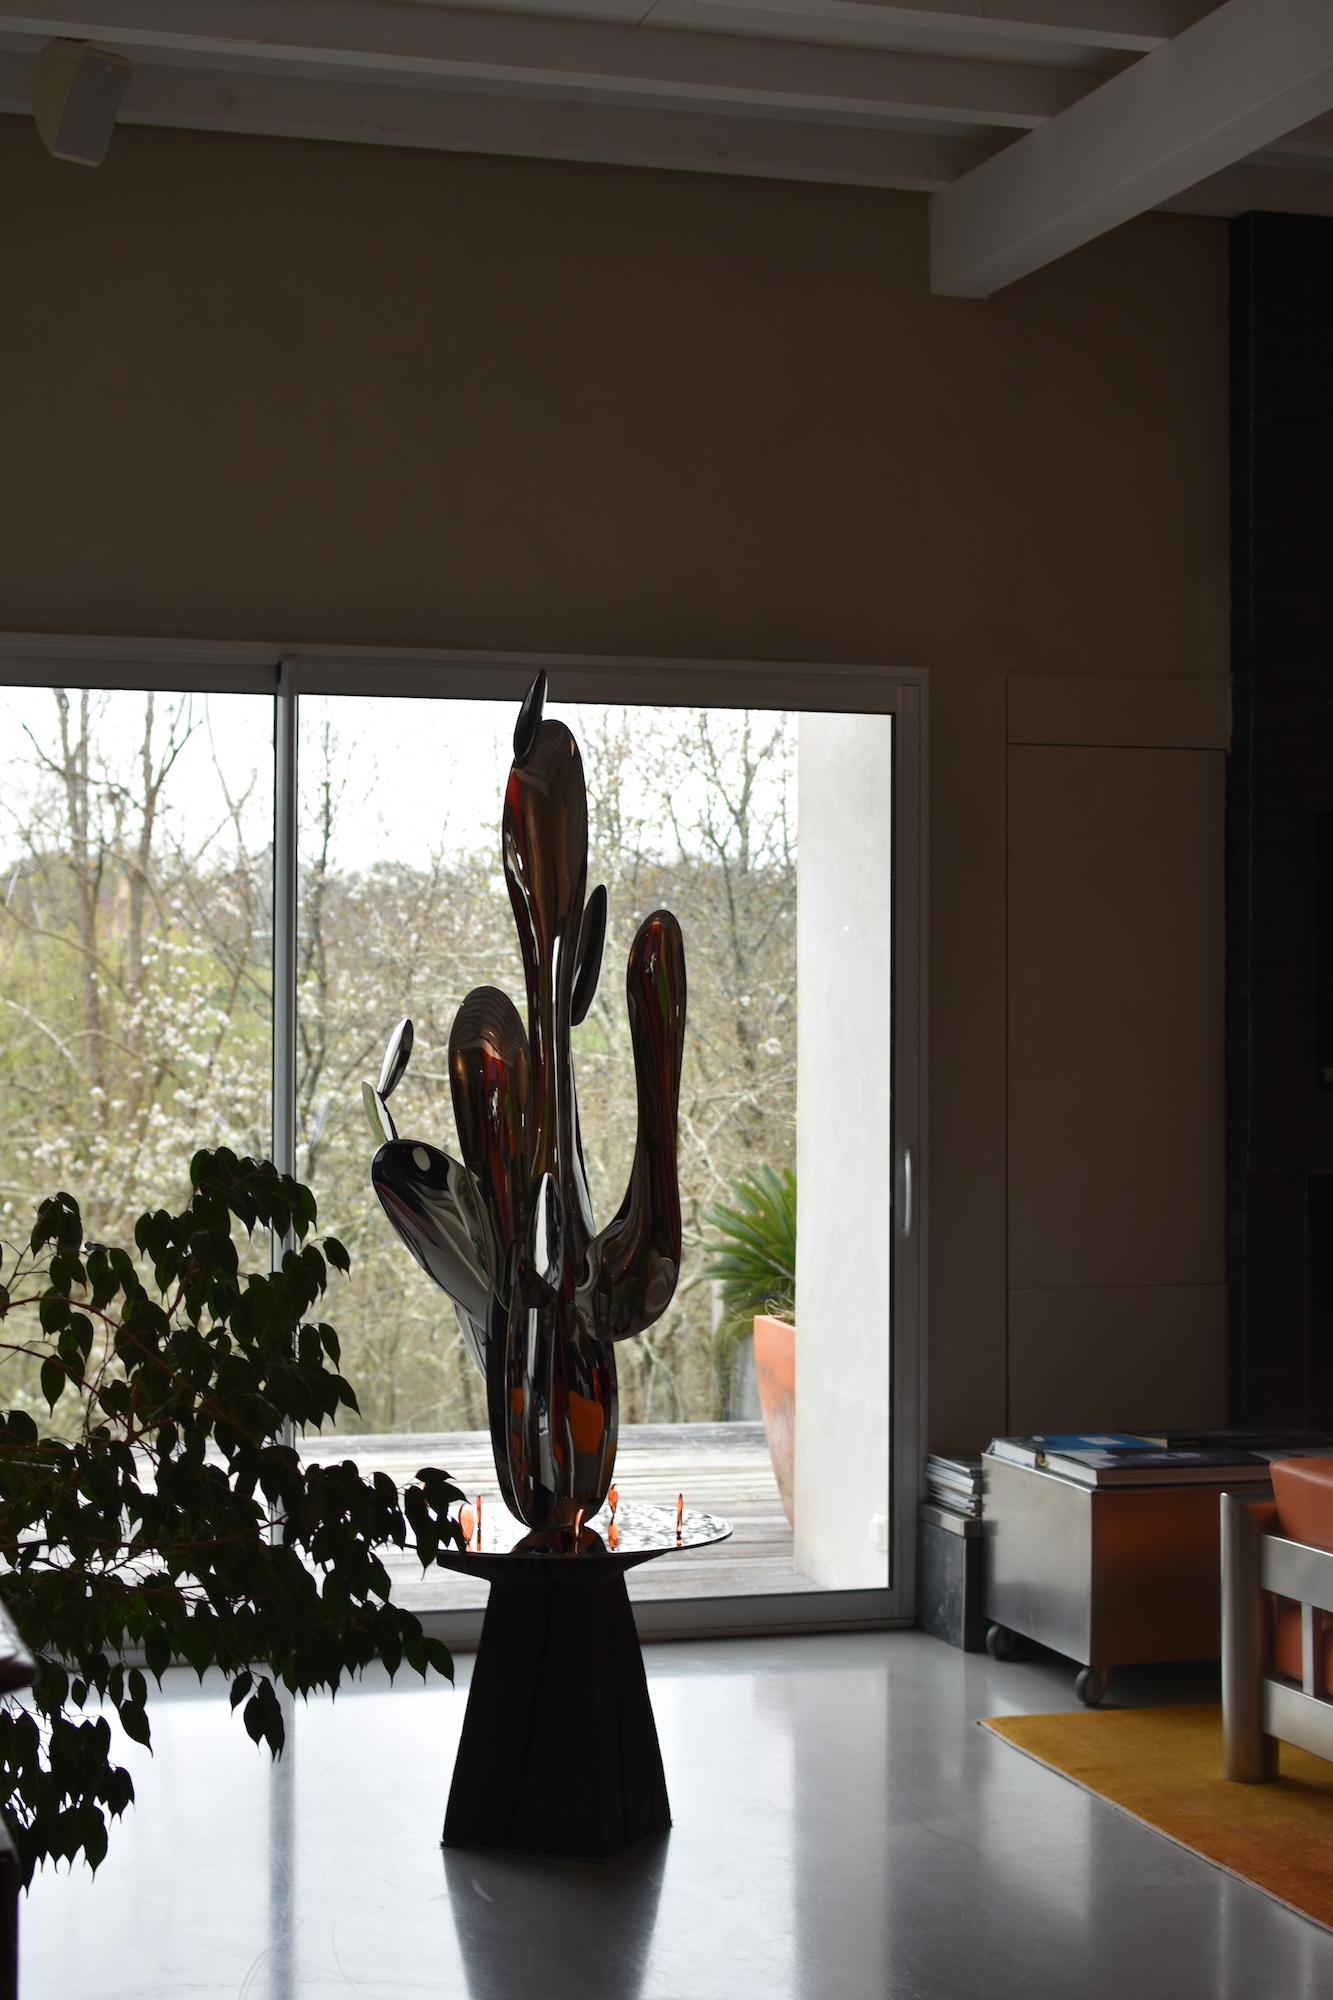 Kaktus by Franck K - Stainless steel sculpture, reflections, light, vision For Sale 14